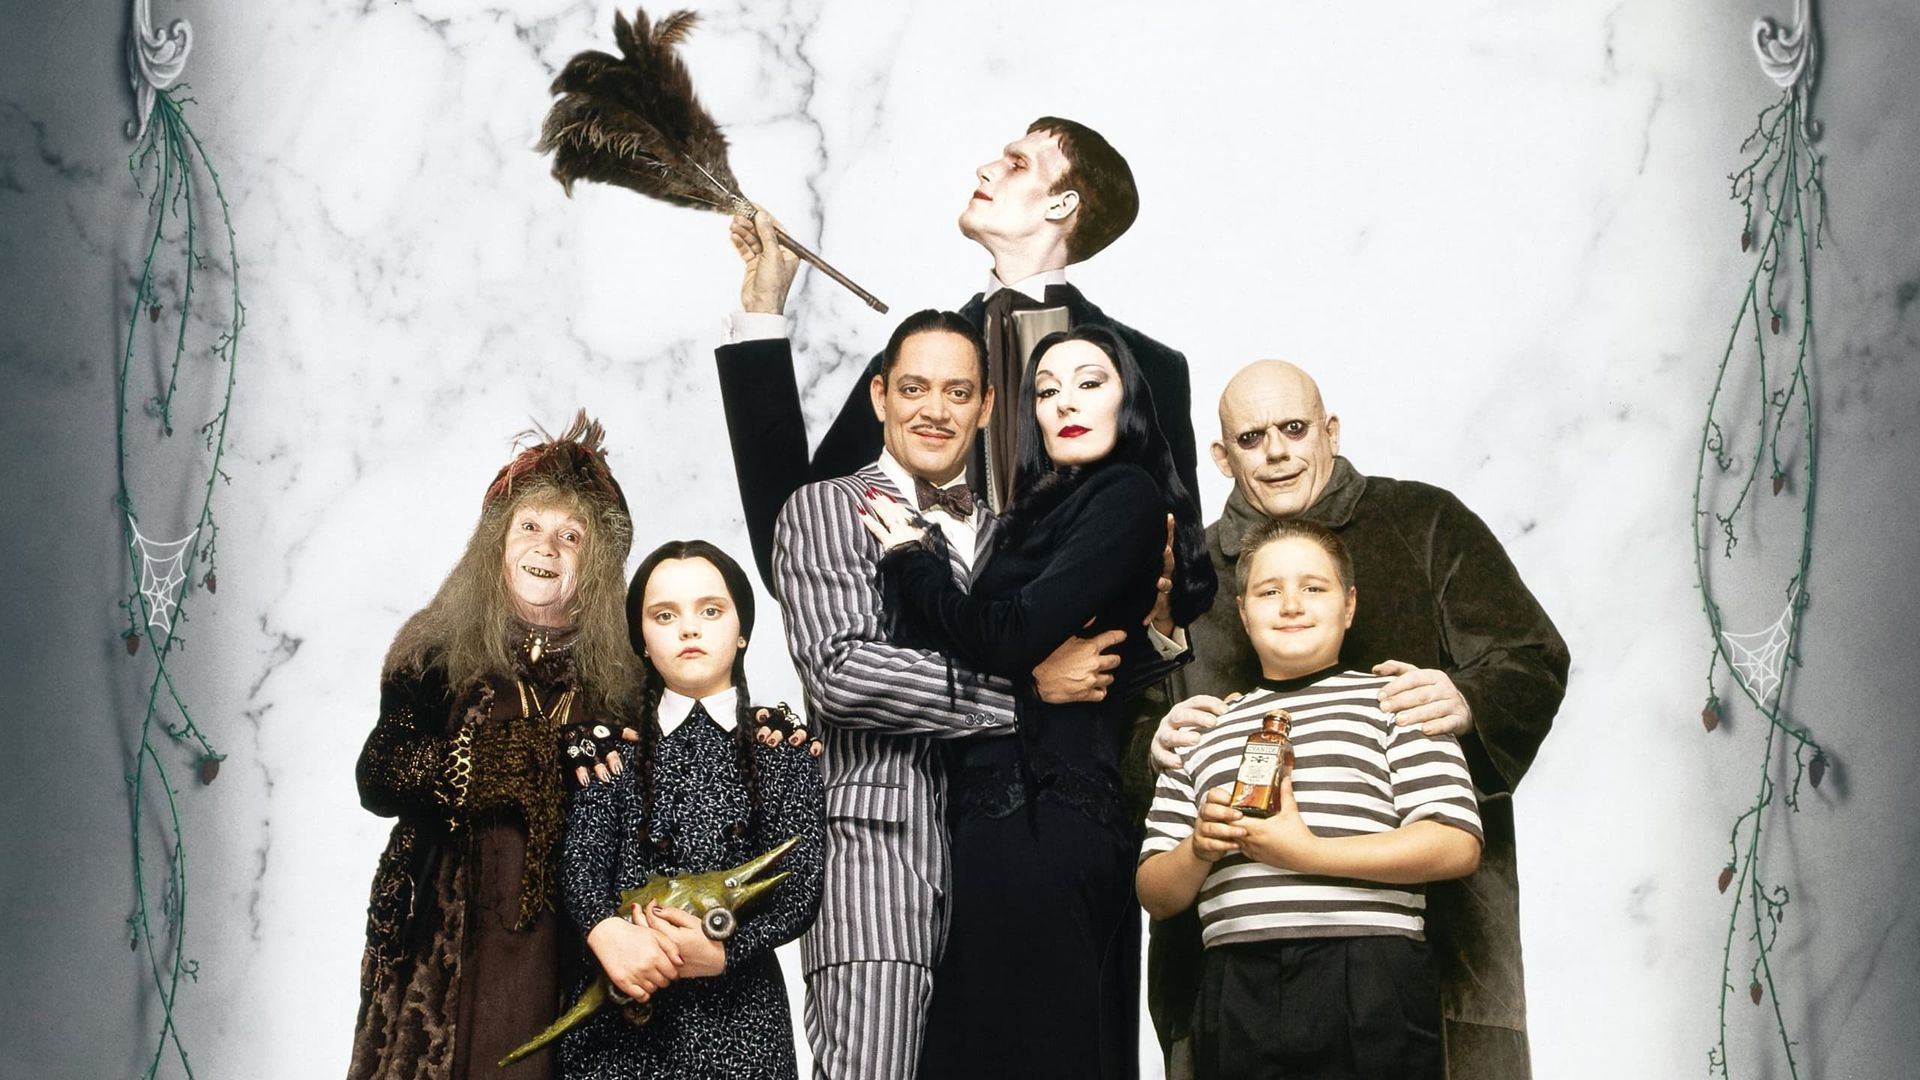 The Addams Family Backdrop